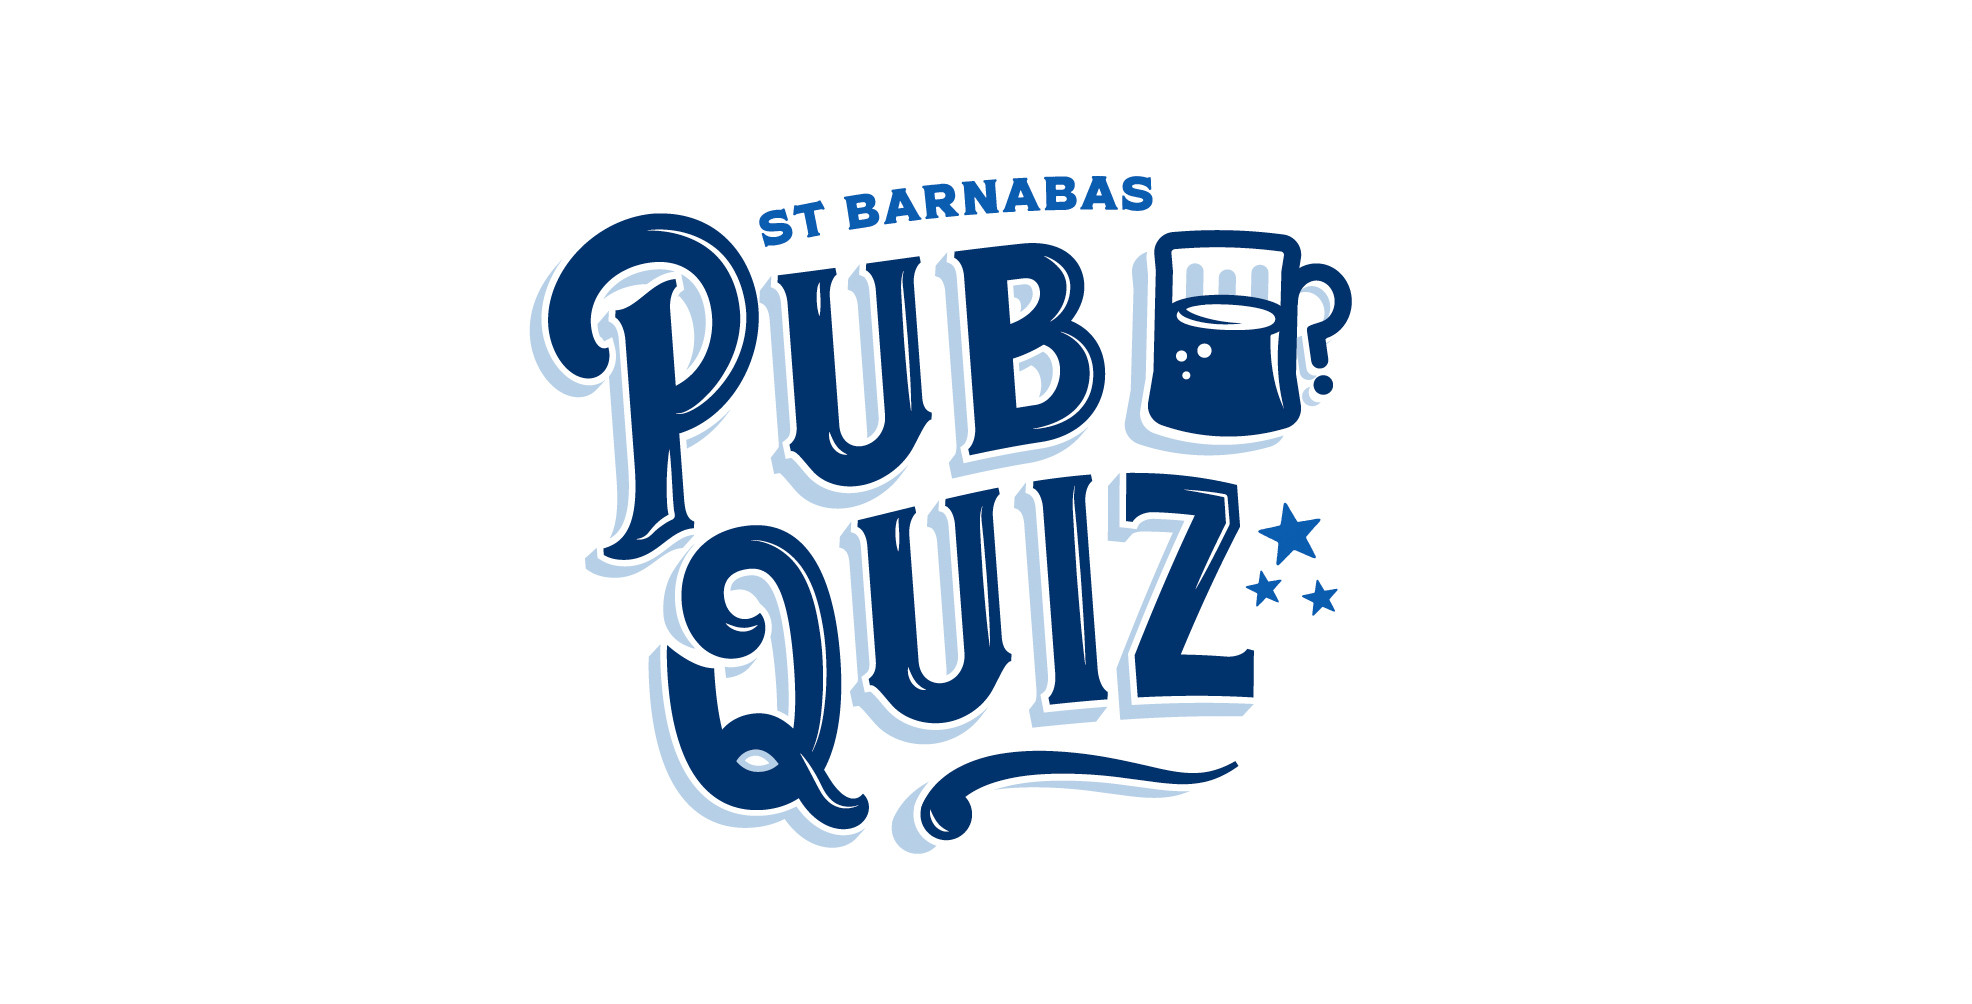 St Barnabas Charity Pub Quiz logo design by Root Studio